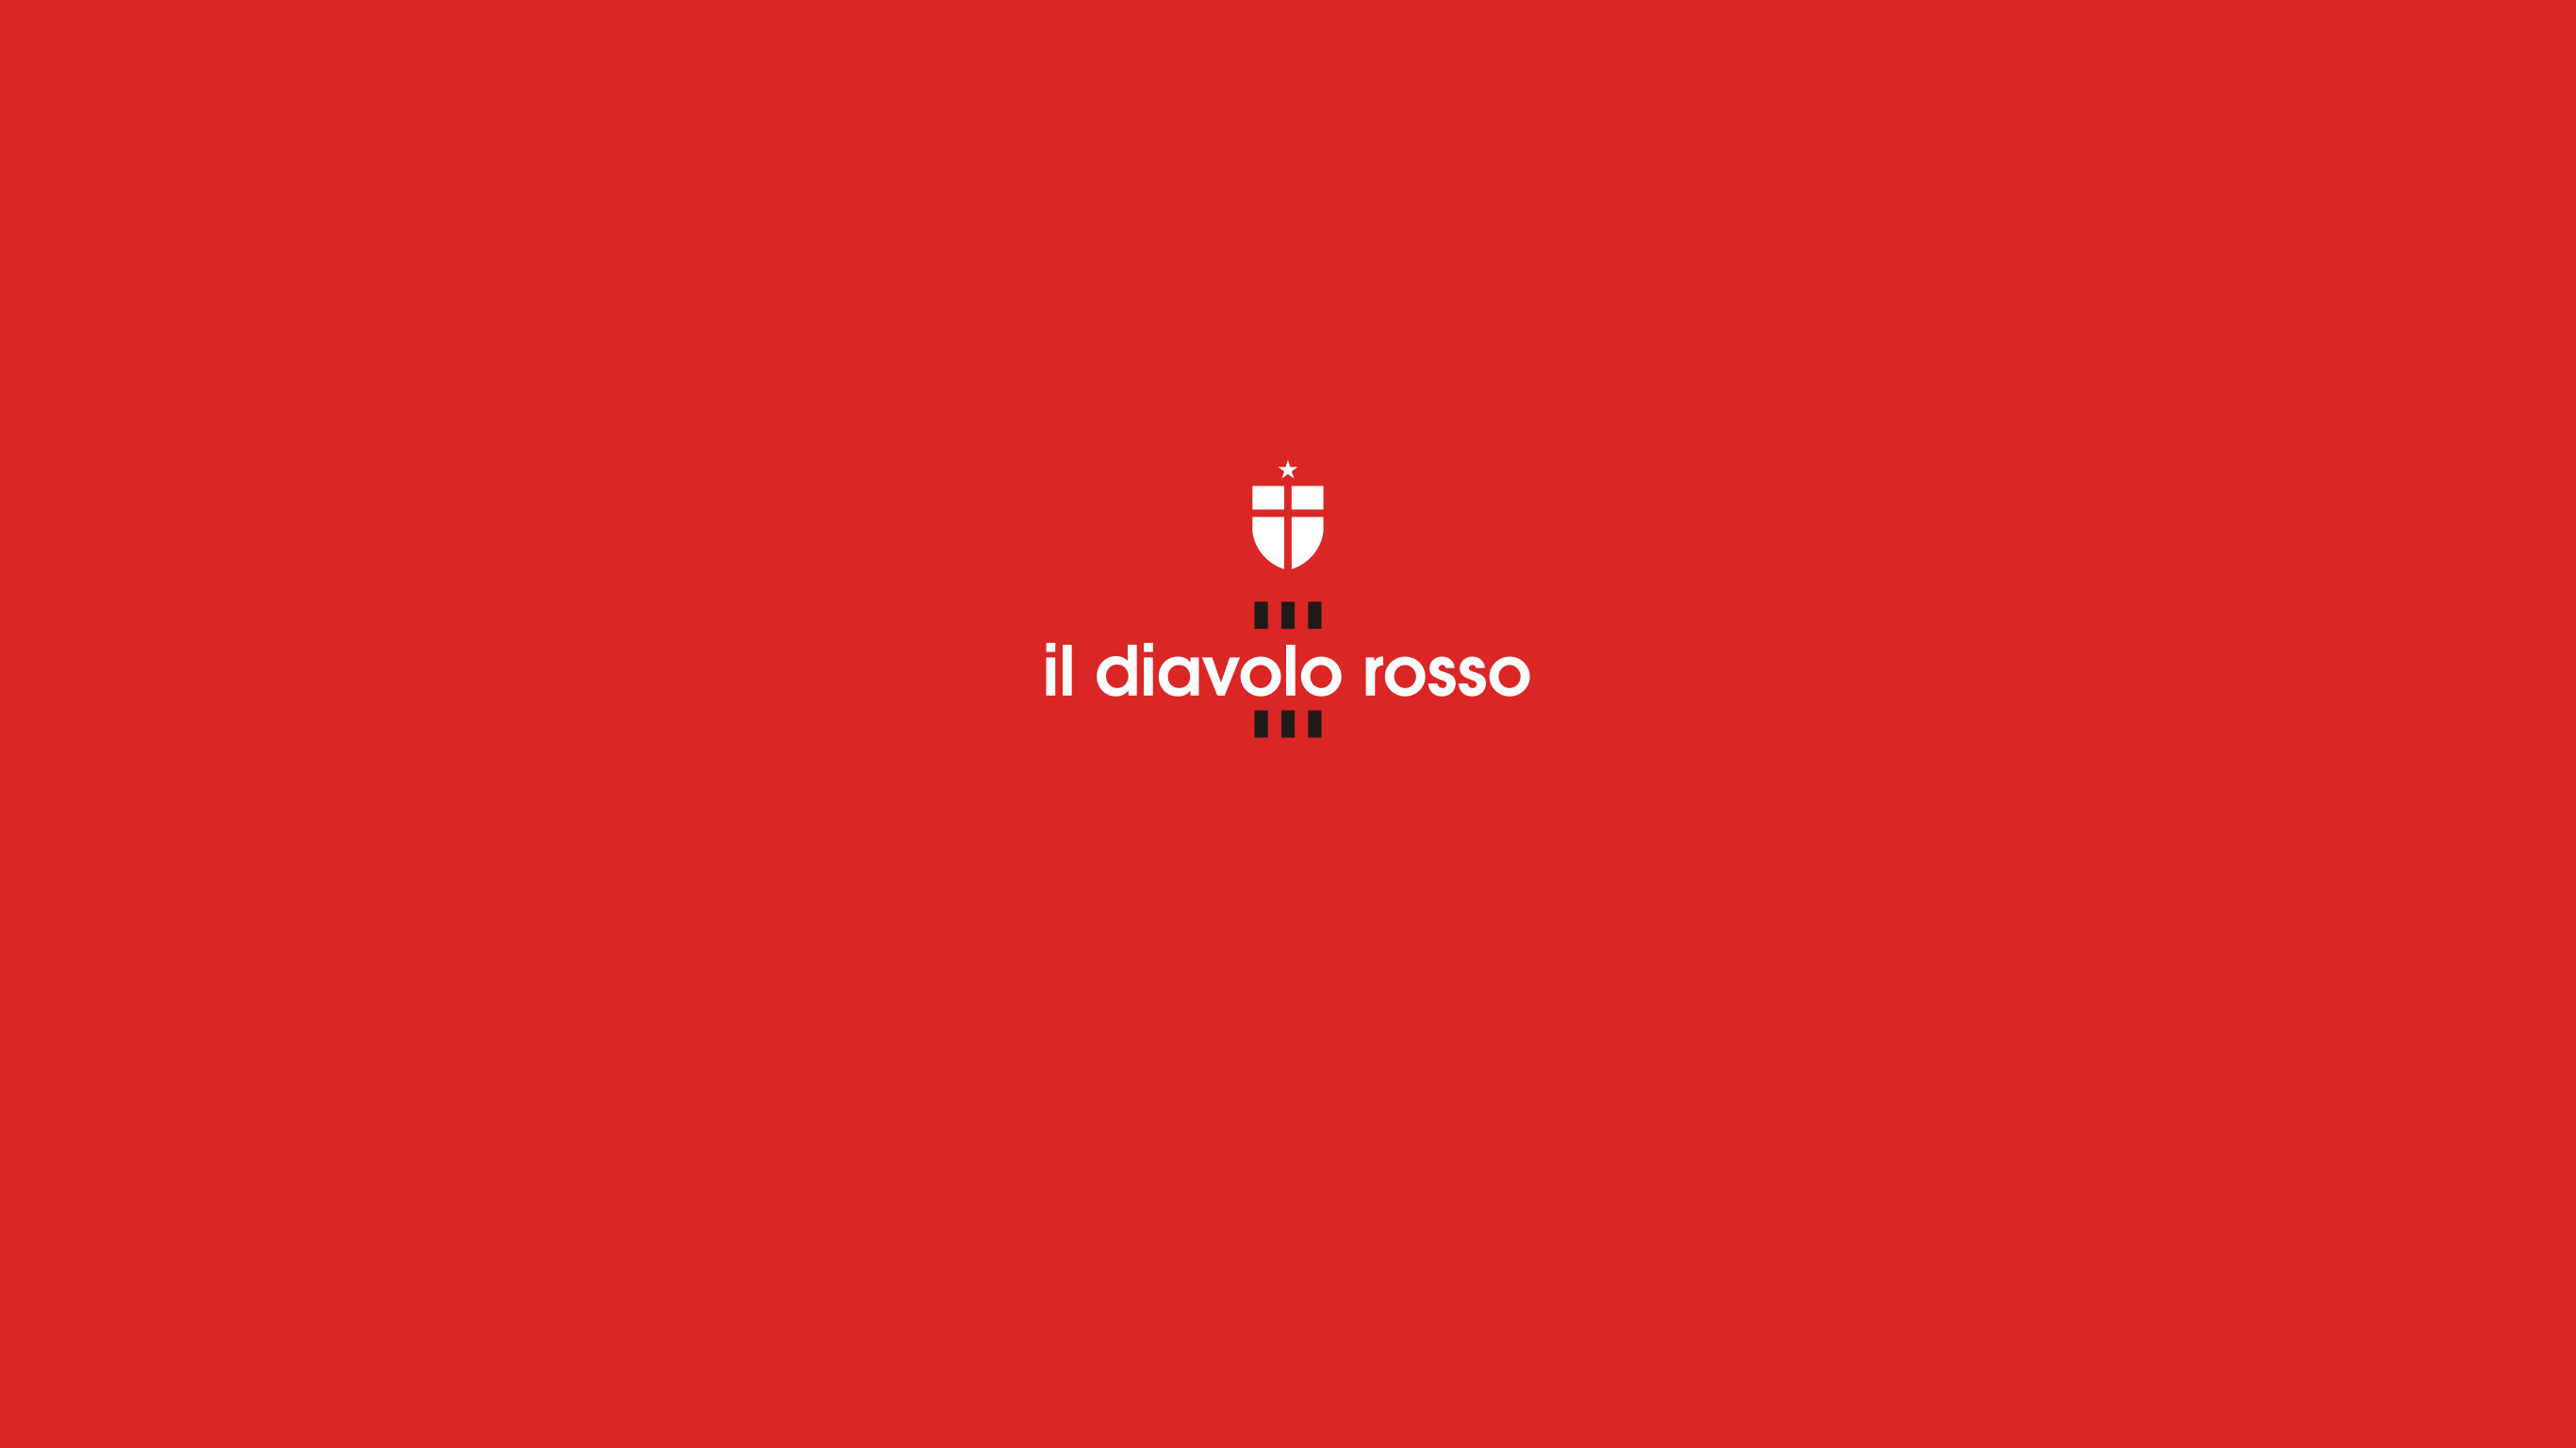 Il Diavolo Rosso simple AC Milan wallpaper by Hamzah Zein